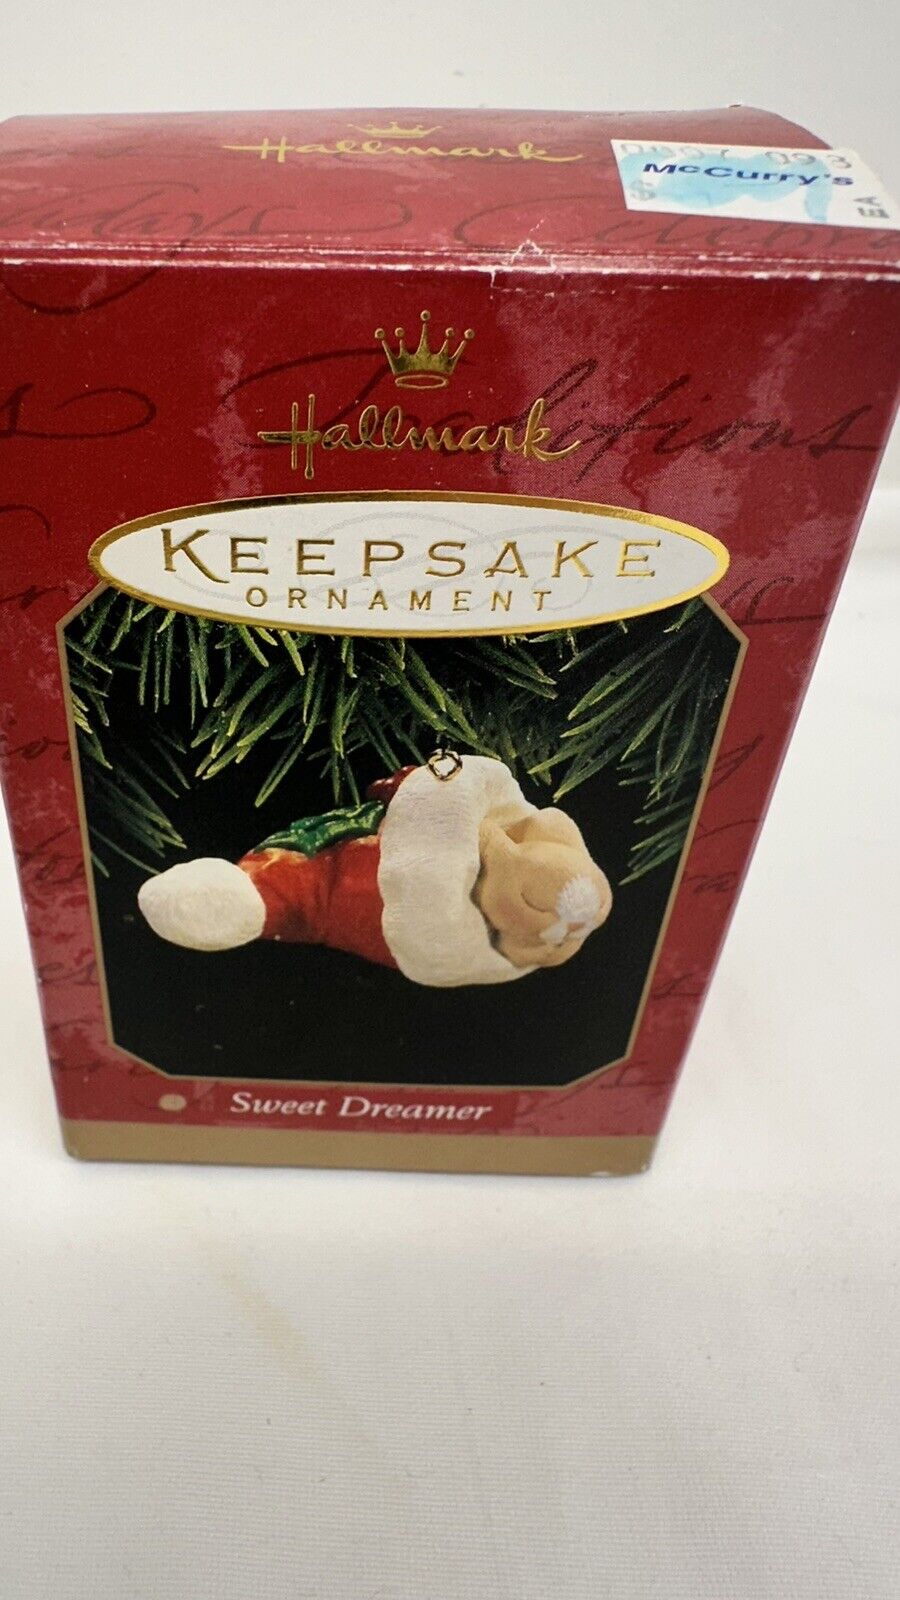 Hallmark Keepsake Ornament Sweet Dreamer 1997 Sculpted by Katrina Bricker